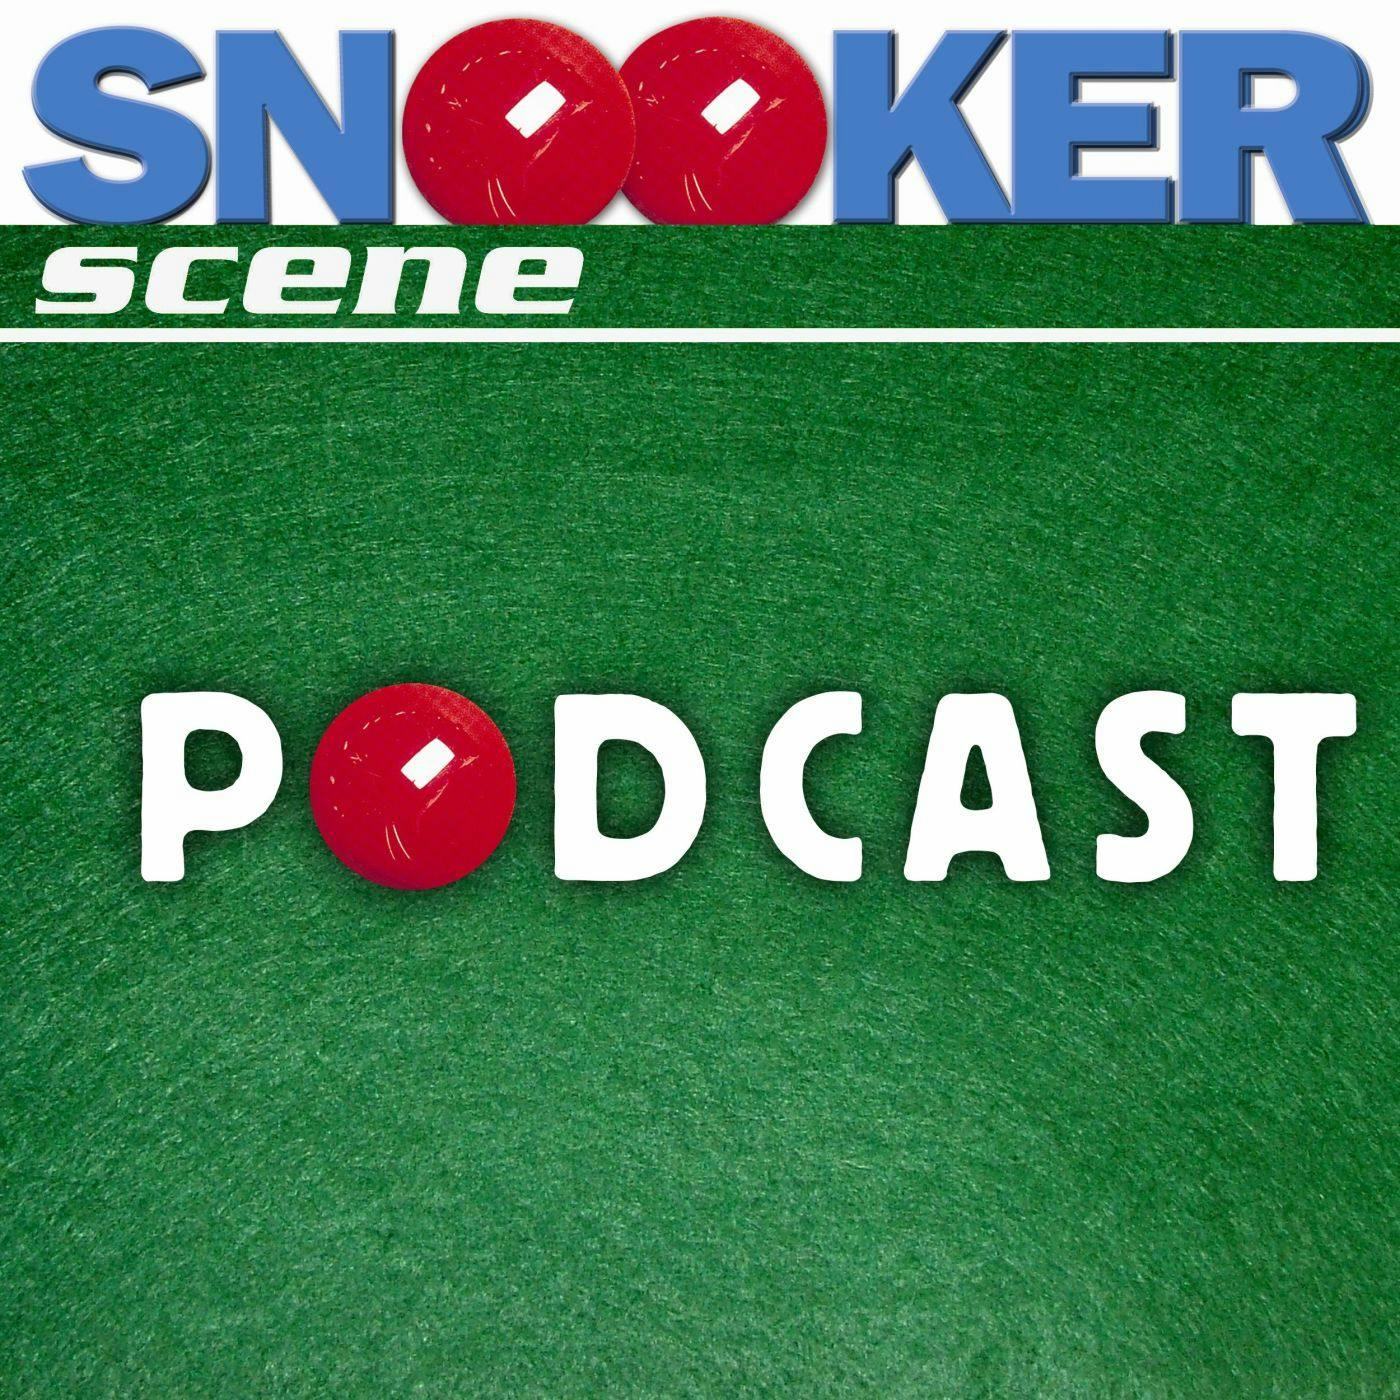 Snooker Scene Podcast episode 145 - Golden Brown